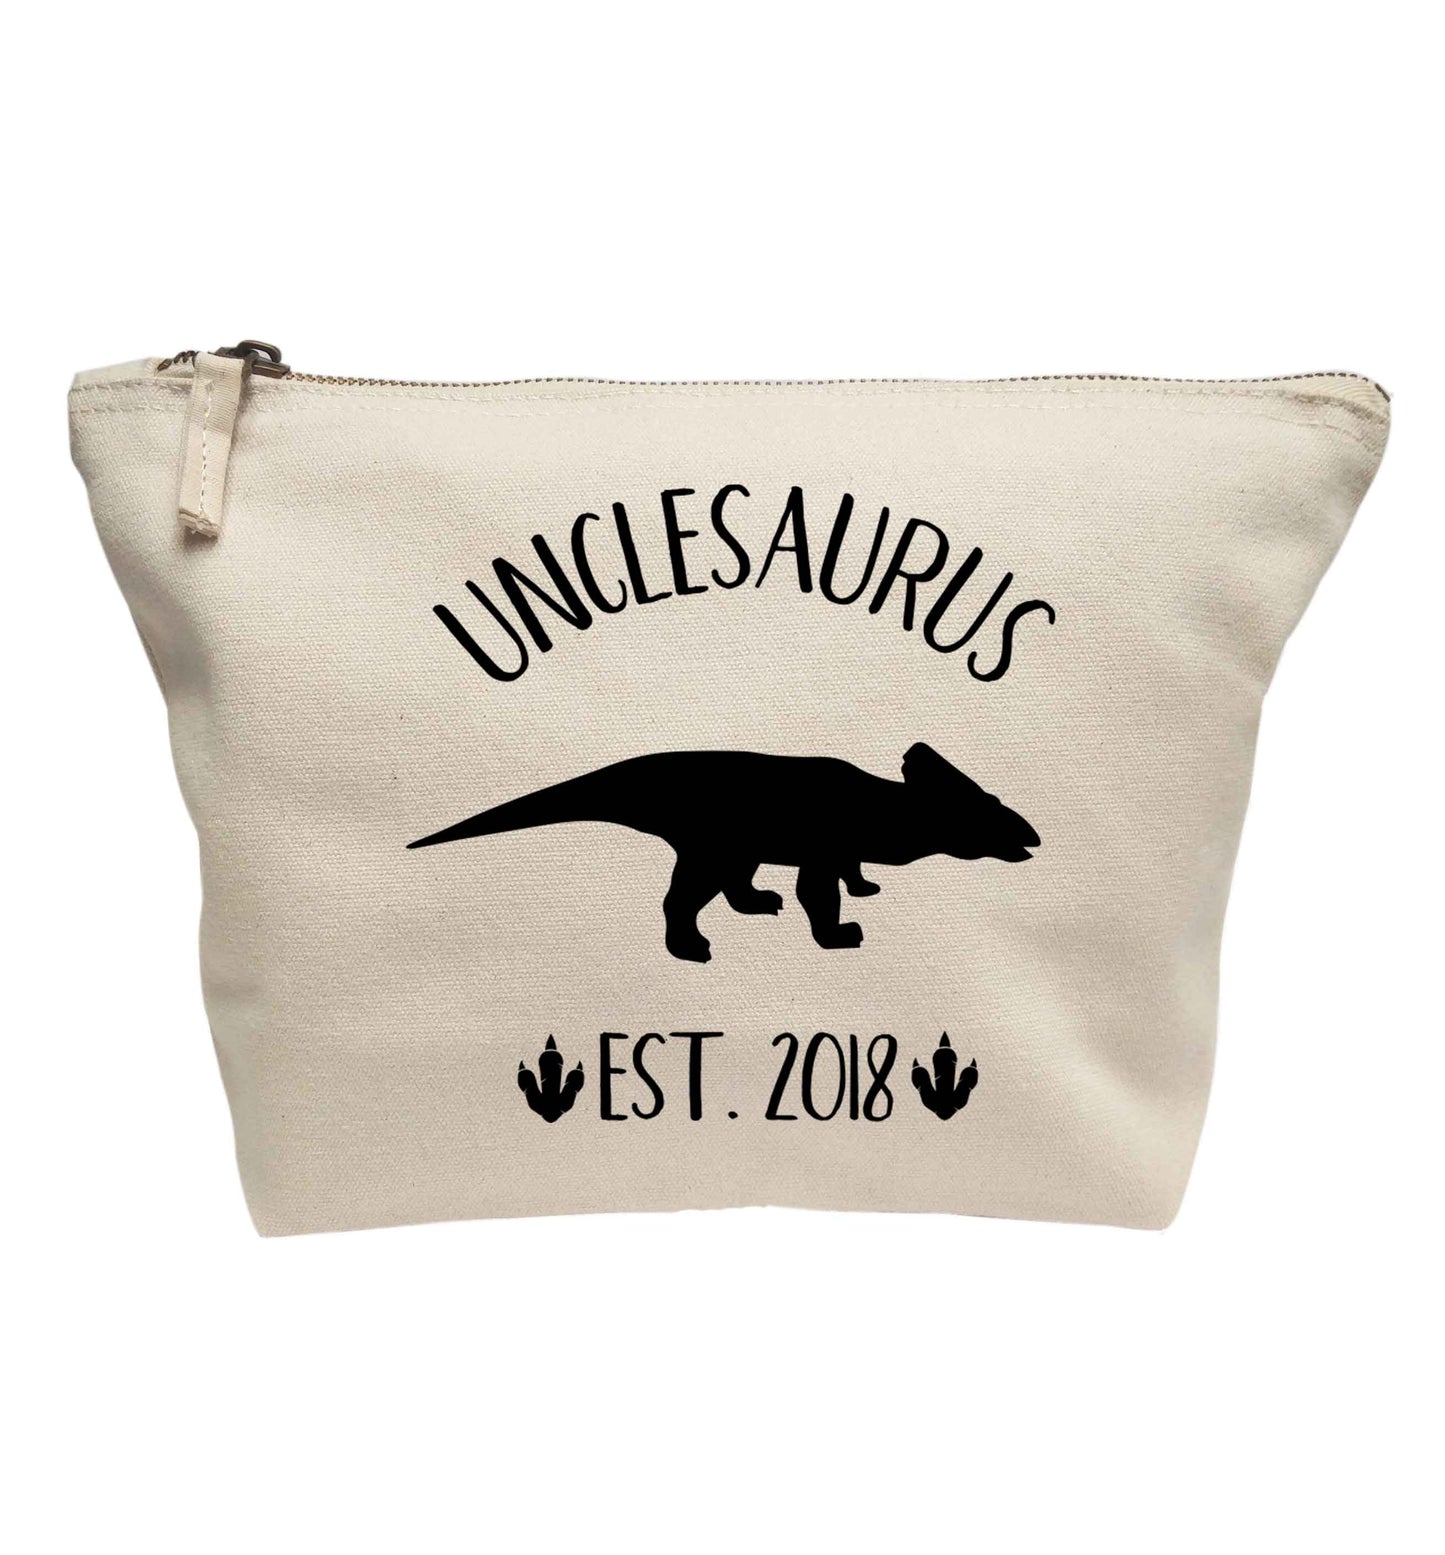 Personalised unclesaurus since (custom date) | makeup / wash bag